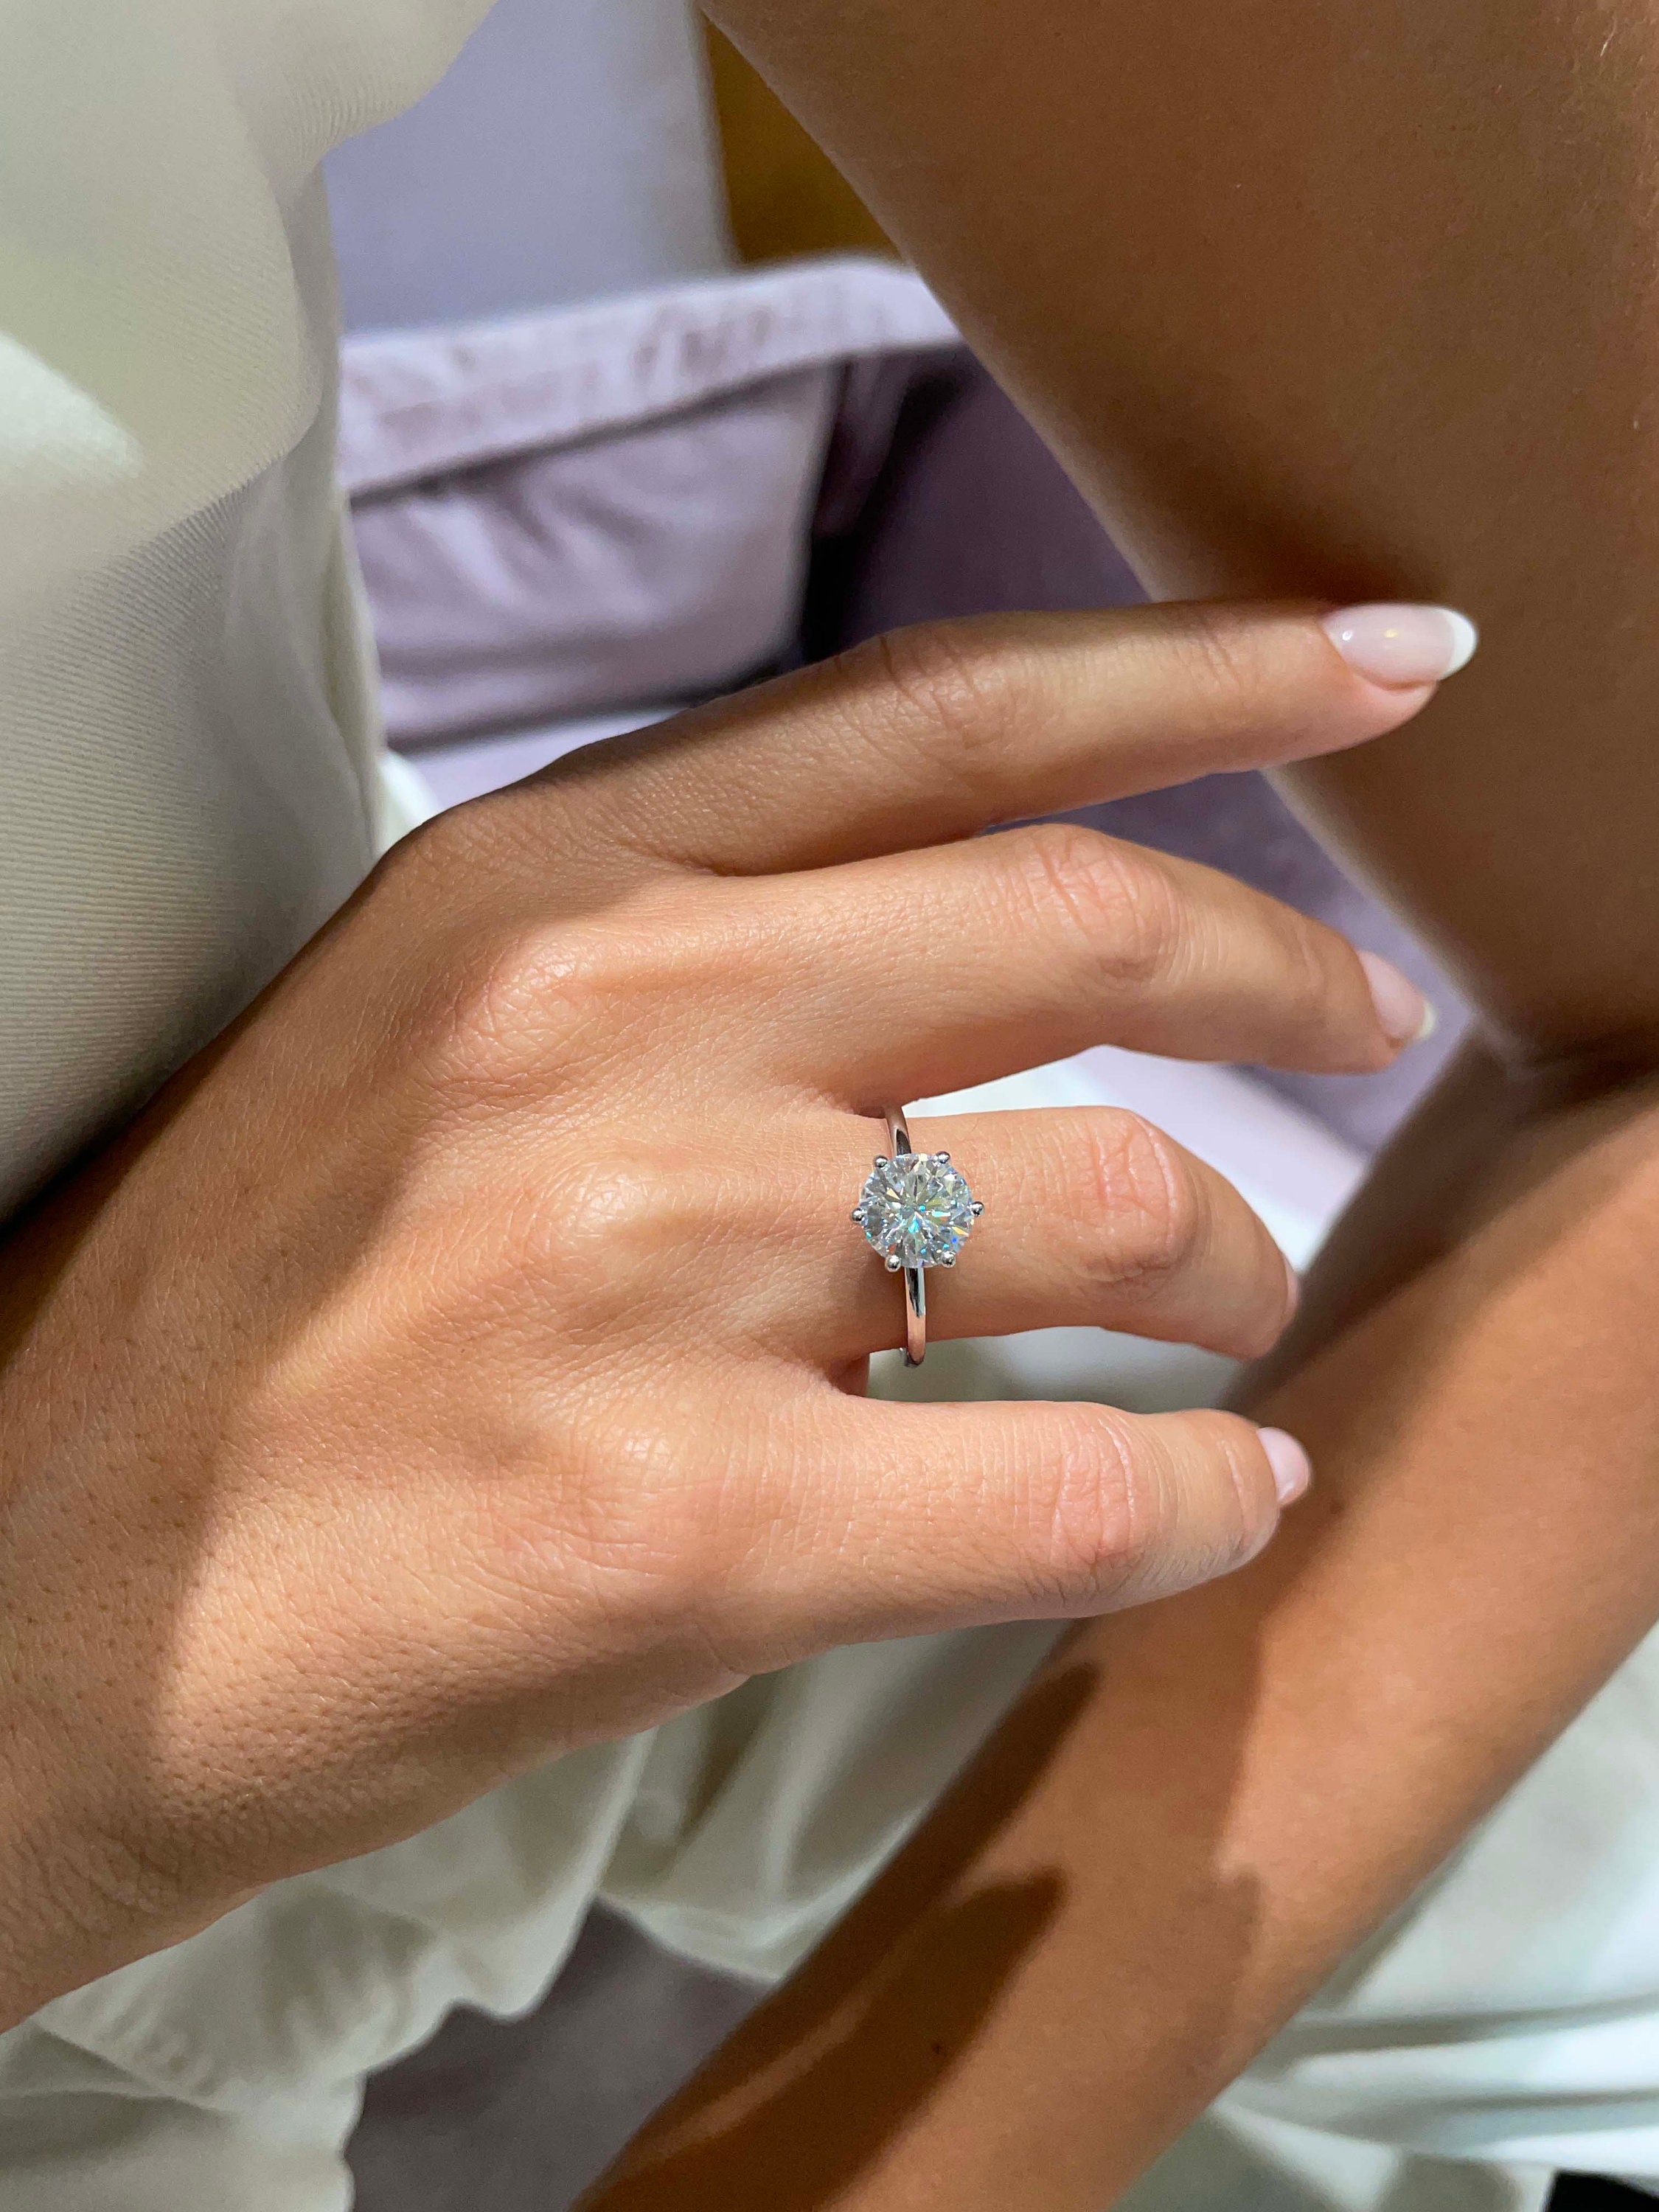 Pricing a 2 Carat Diamond Ring - Ken & Dana Design